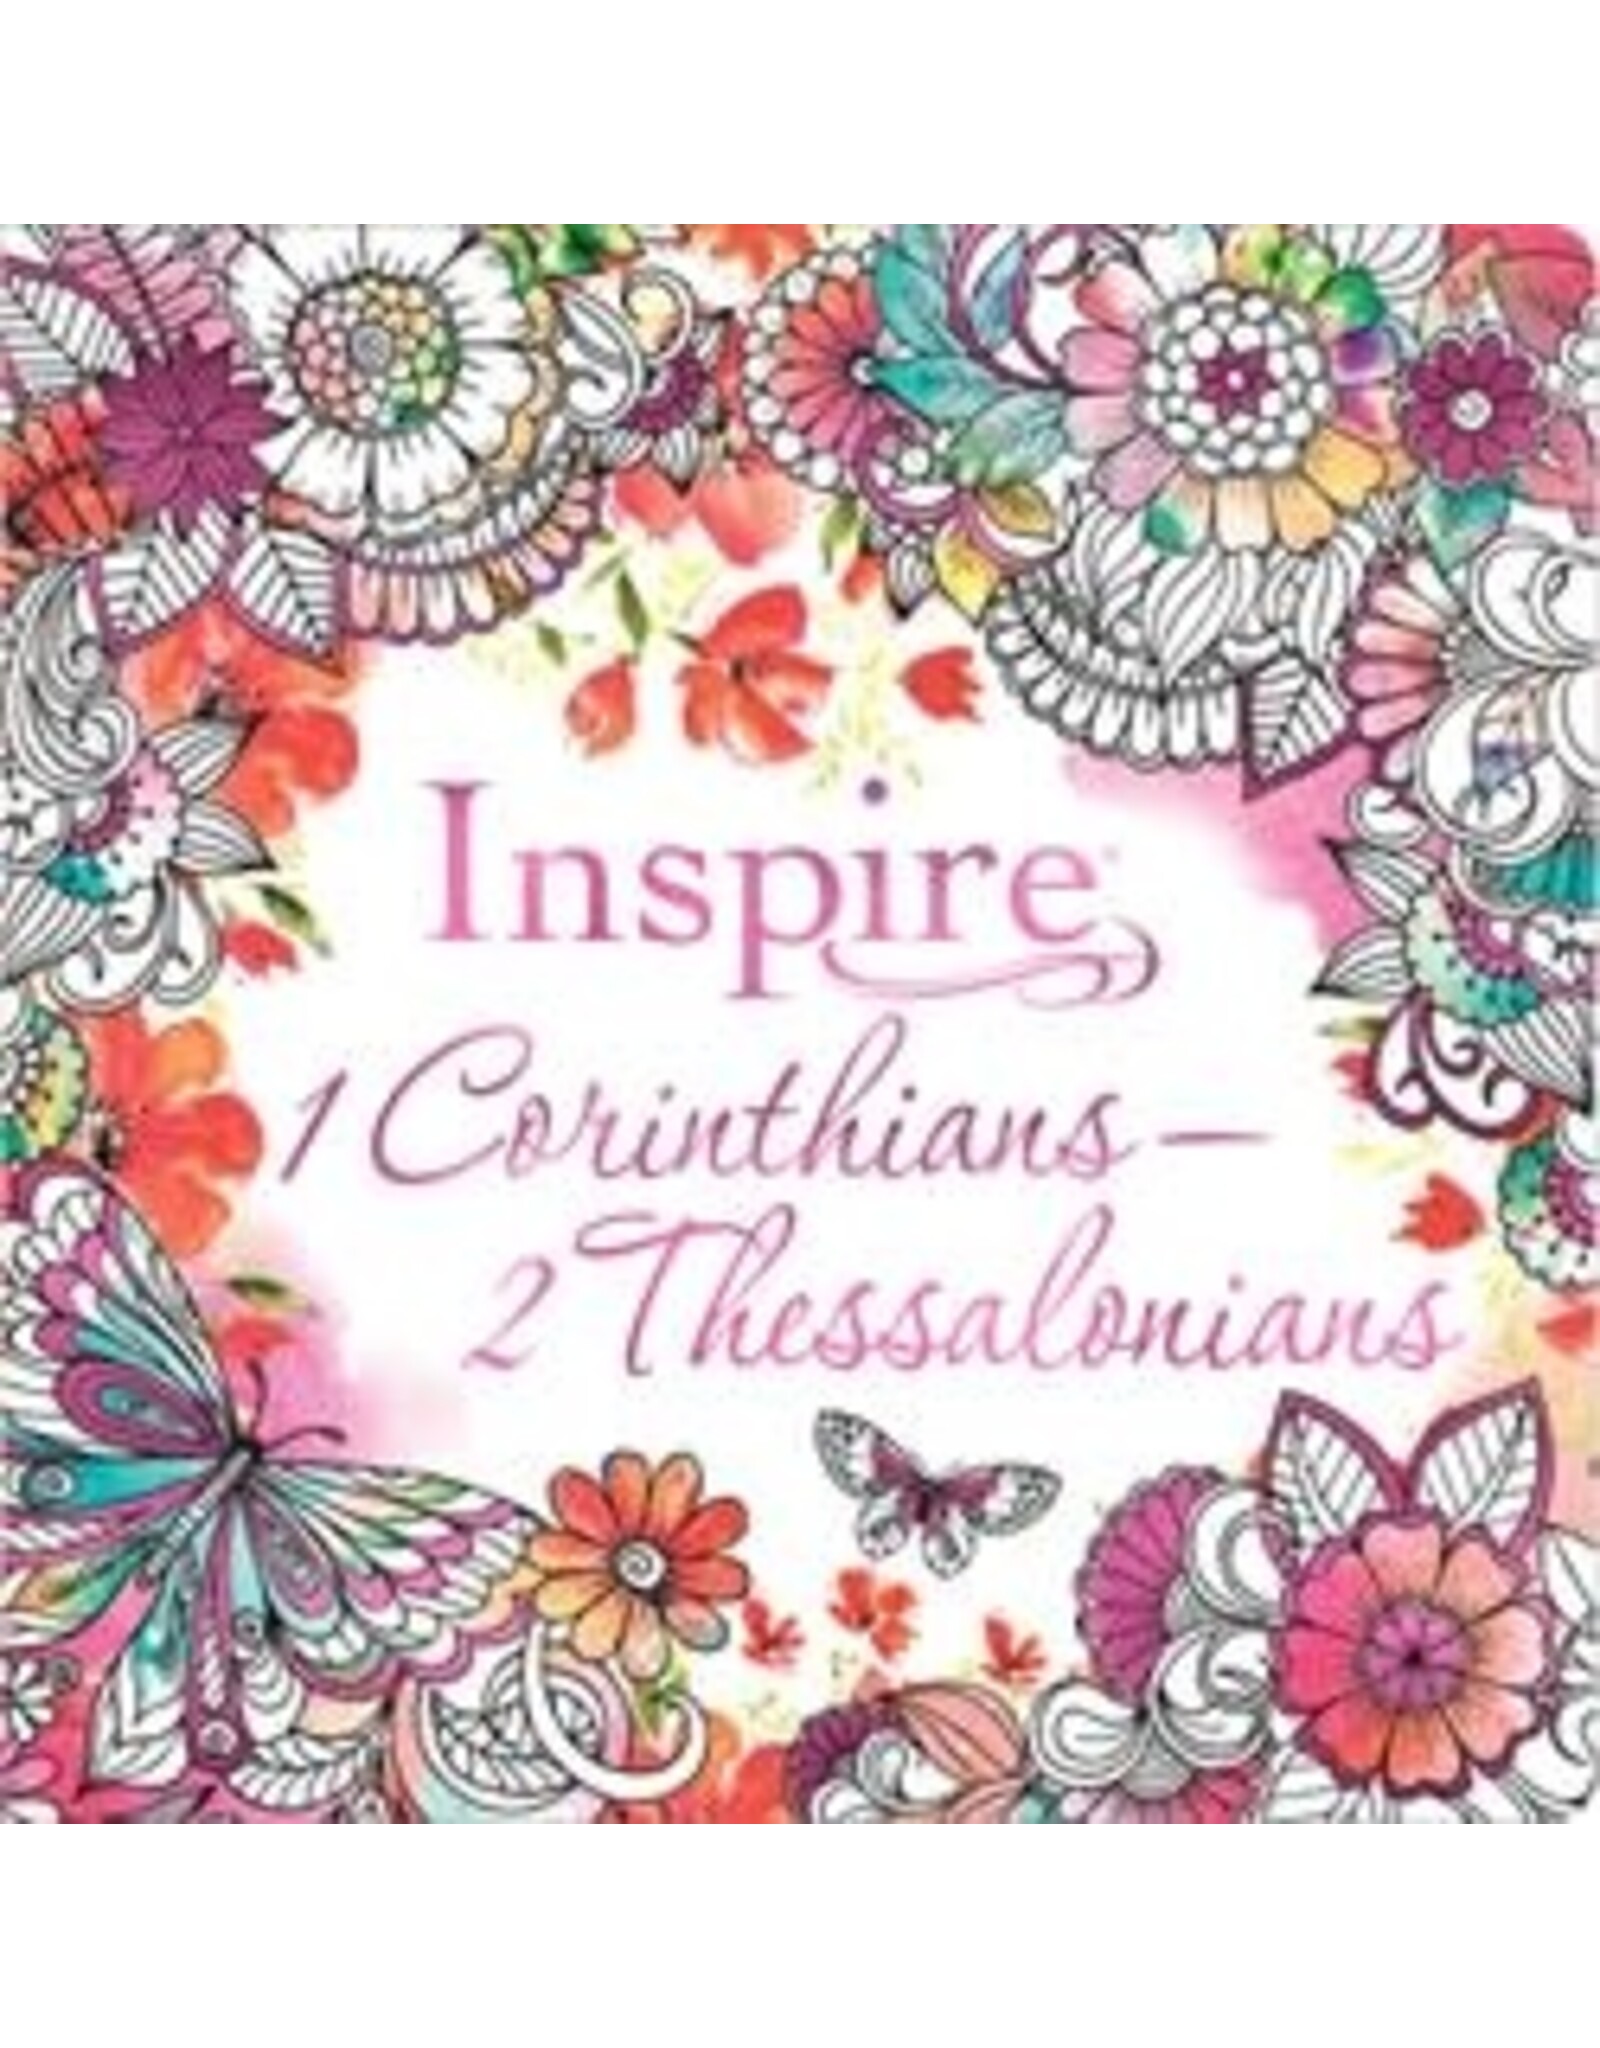 Inspire: 1 Corinthians–2 Thessalonians Coloring & Creative Journaling  Soft Cover NLT